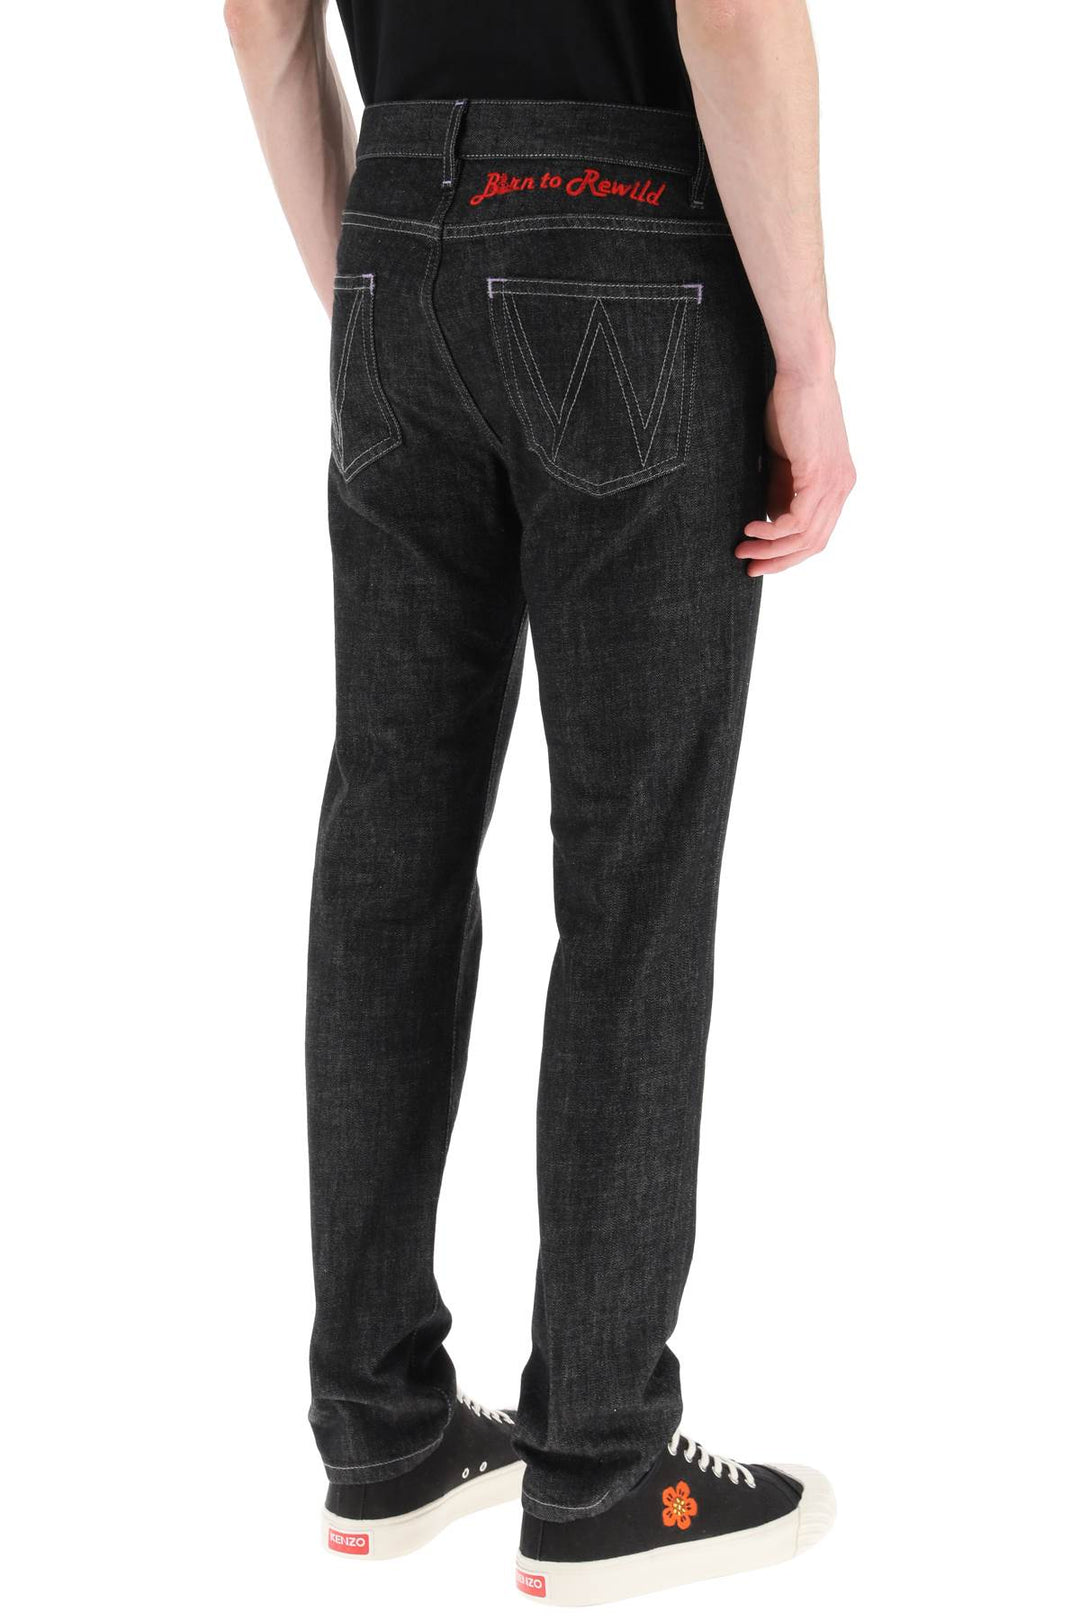 Vivienne Westwood Organic Cotton Jeans   Nero